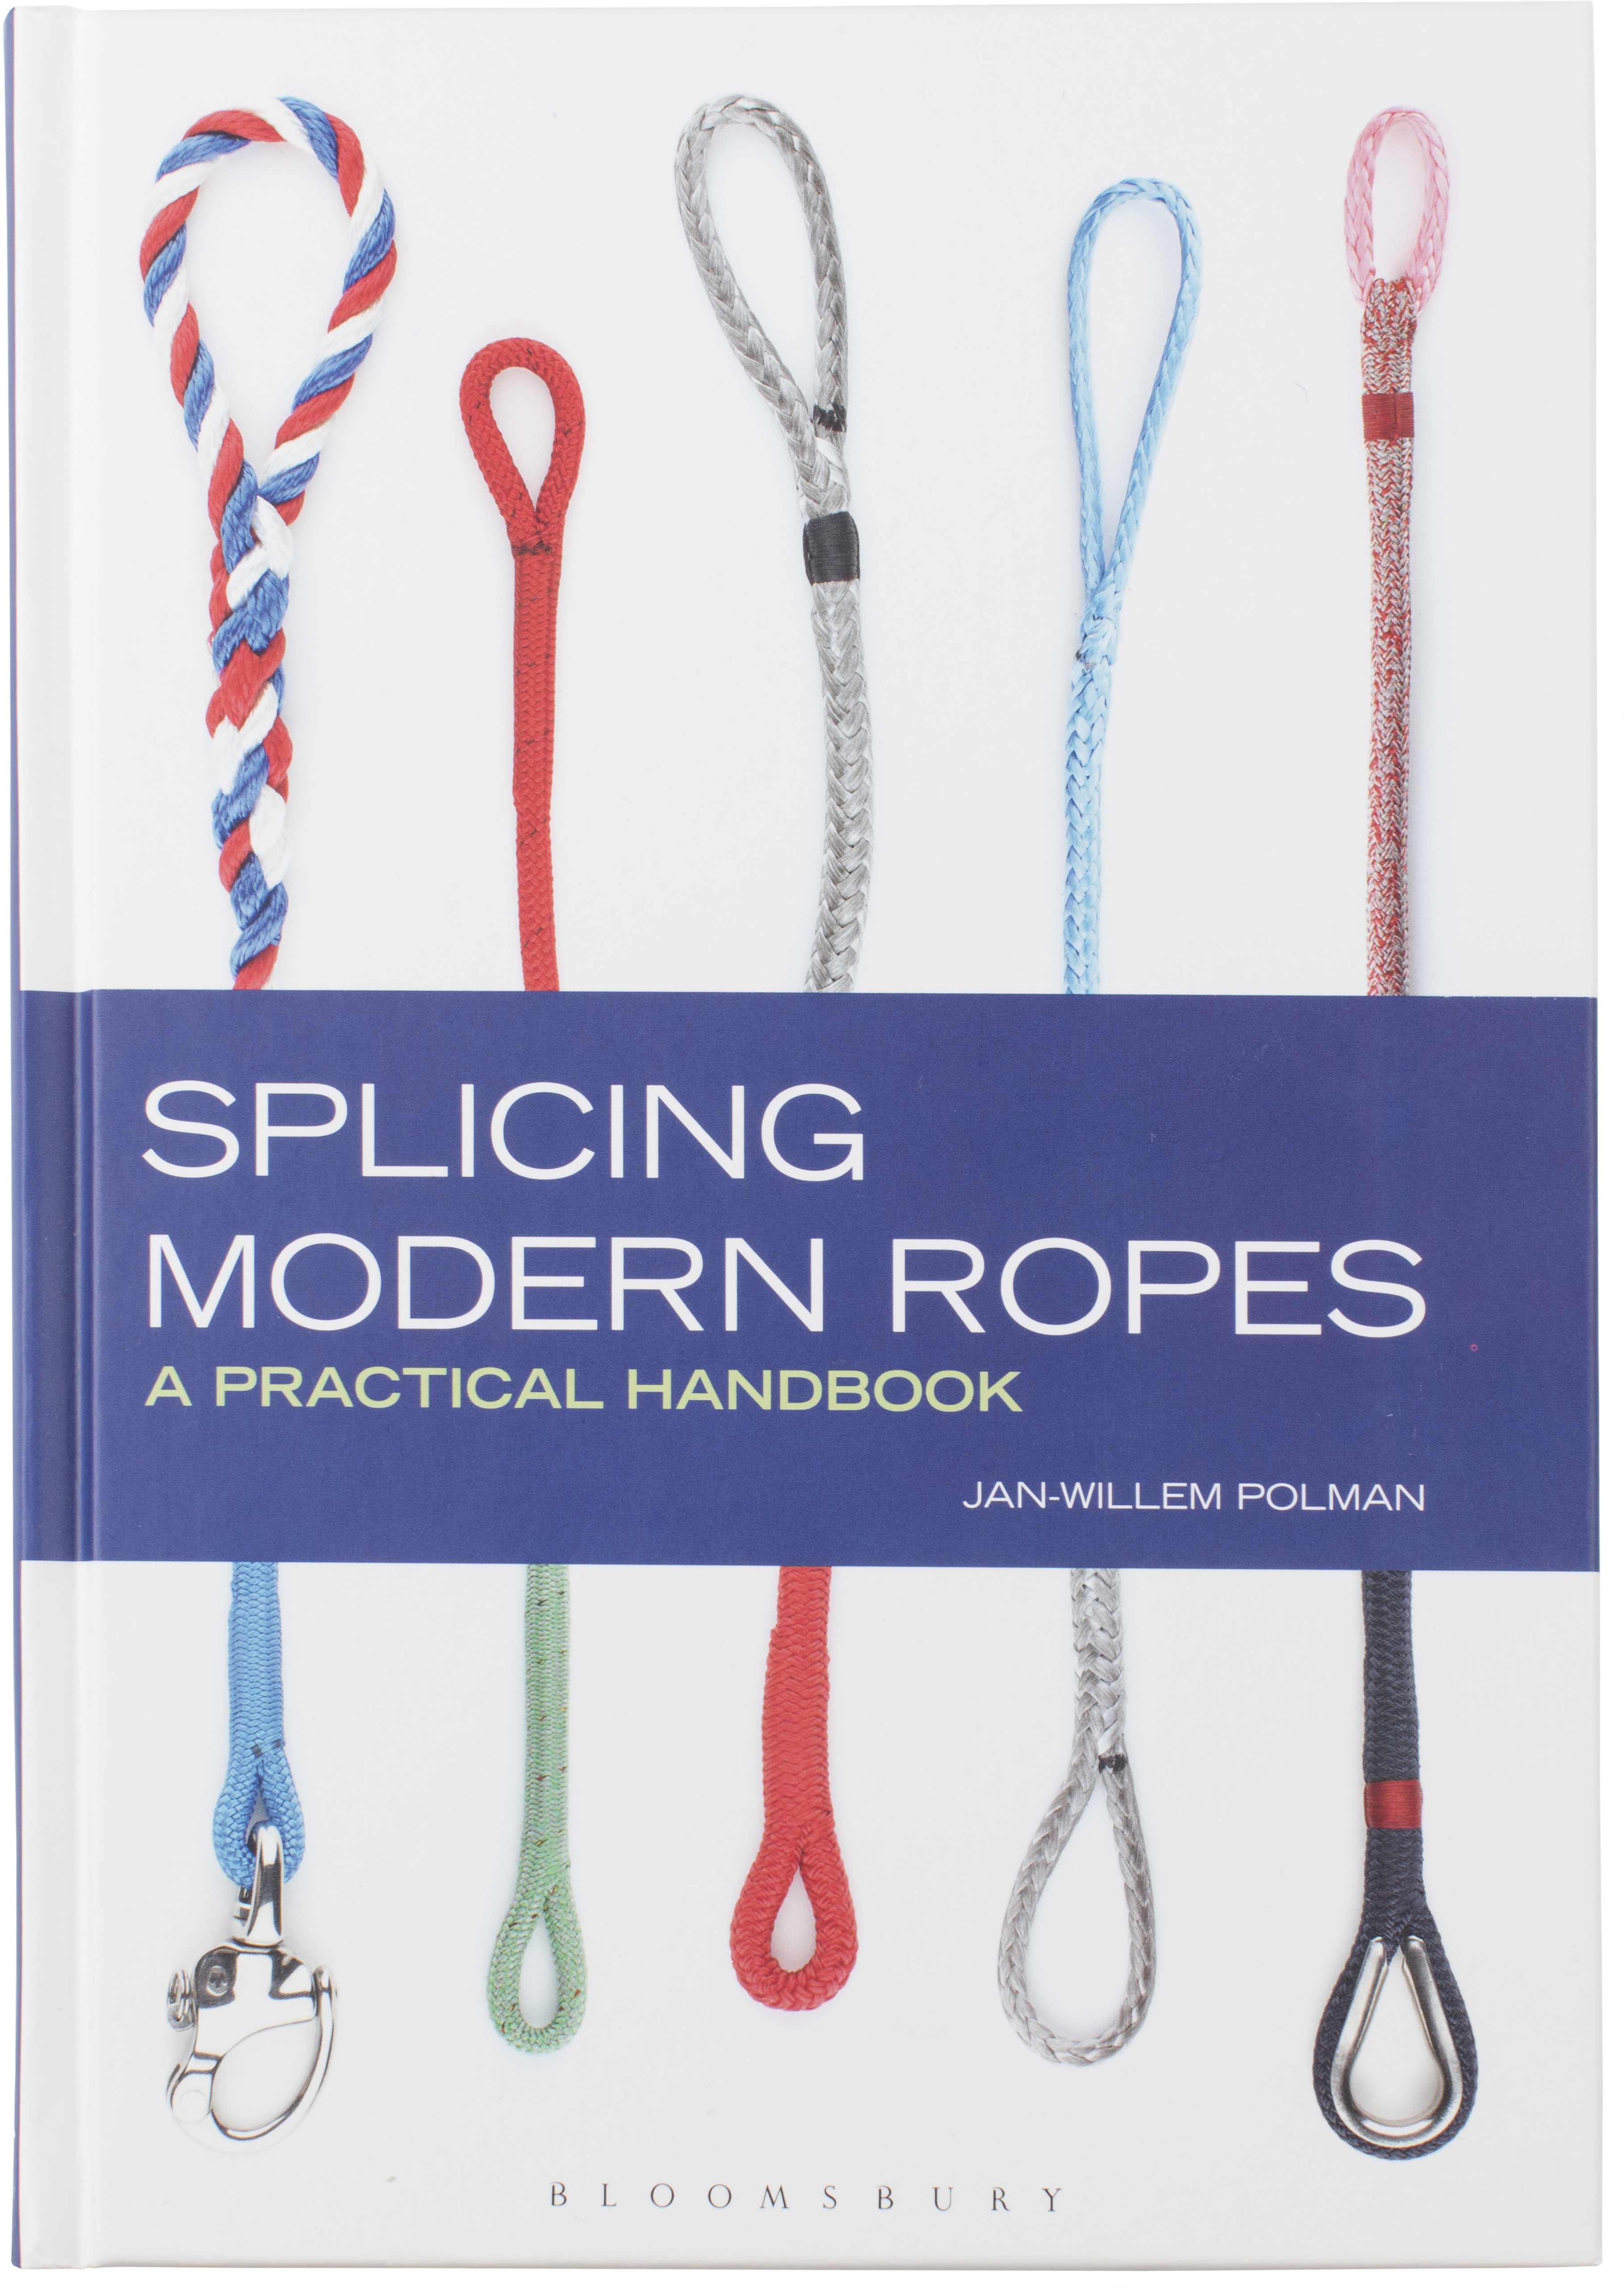 D-Splicer Bok -"Splicing modern ropes"